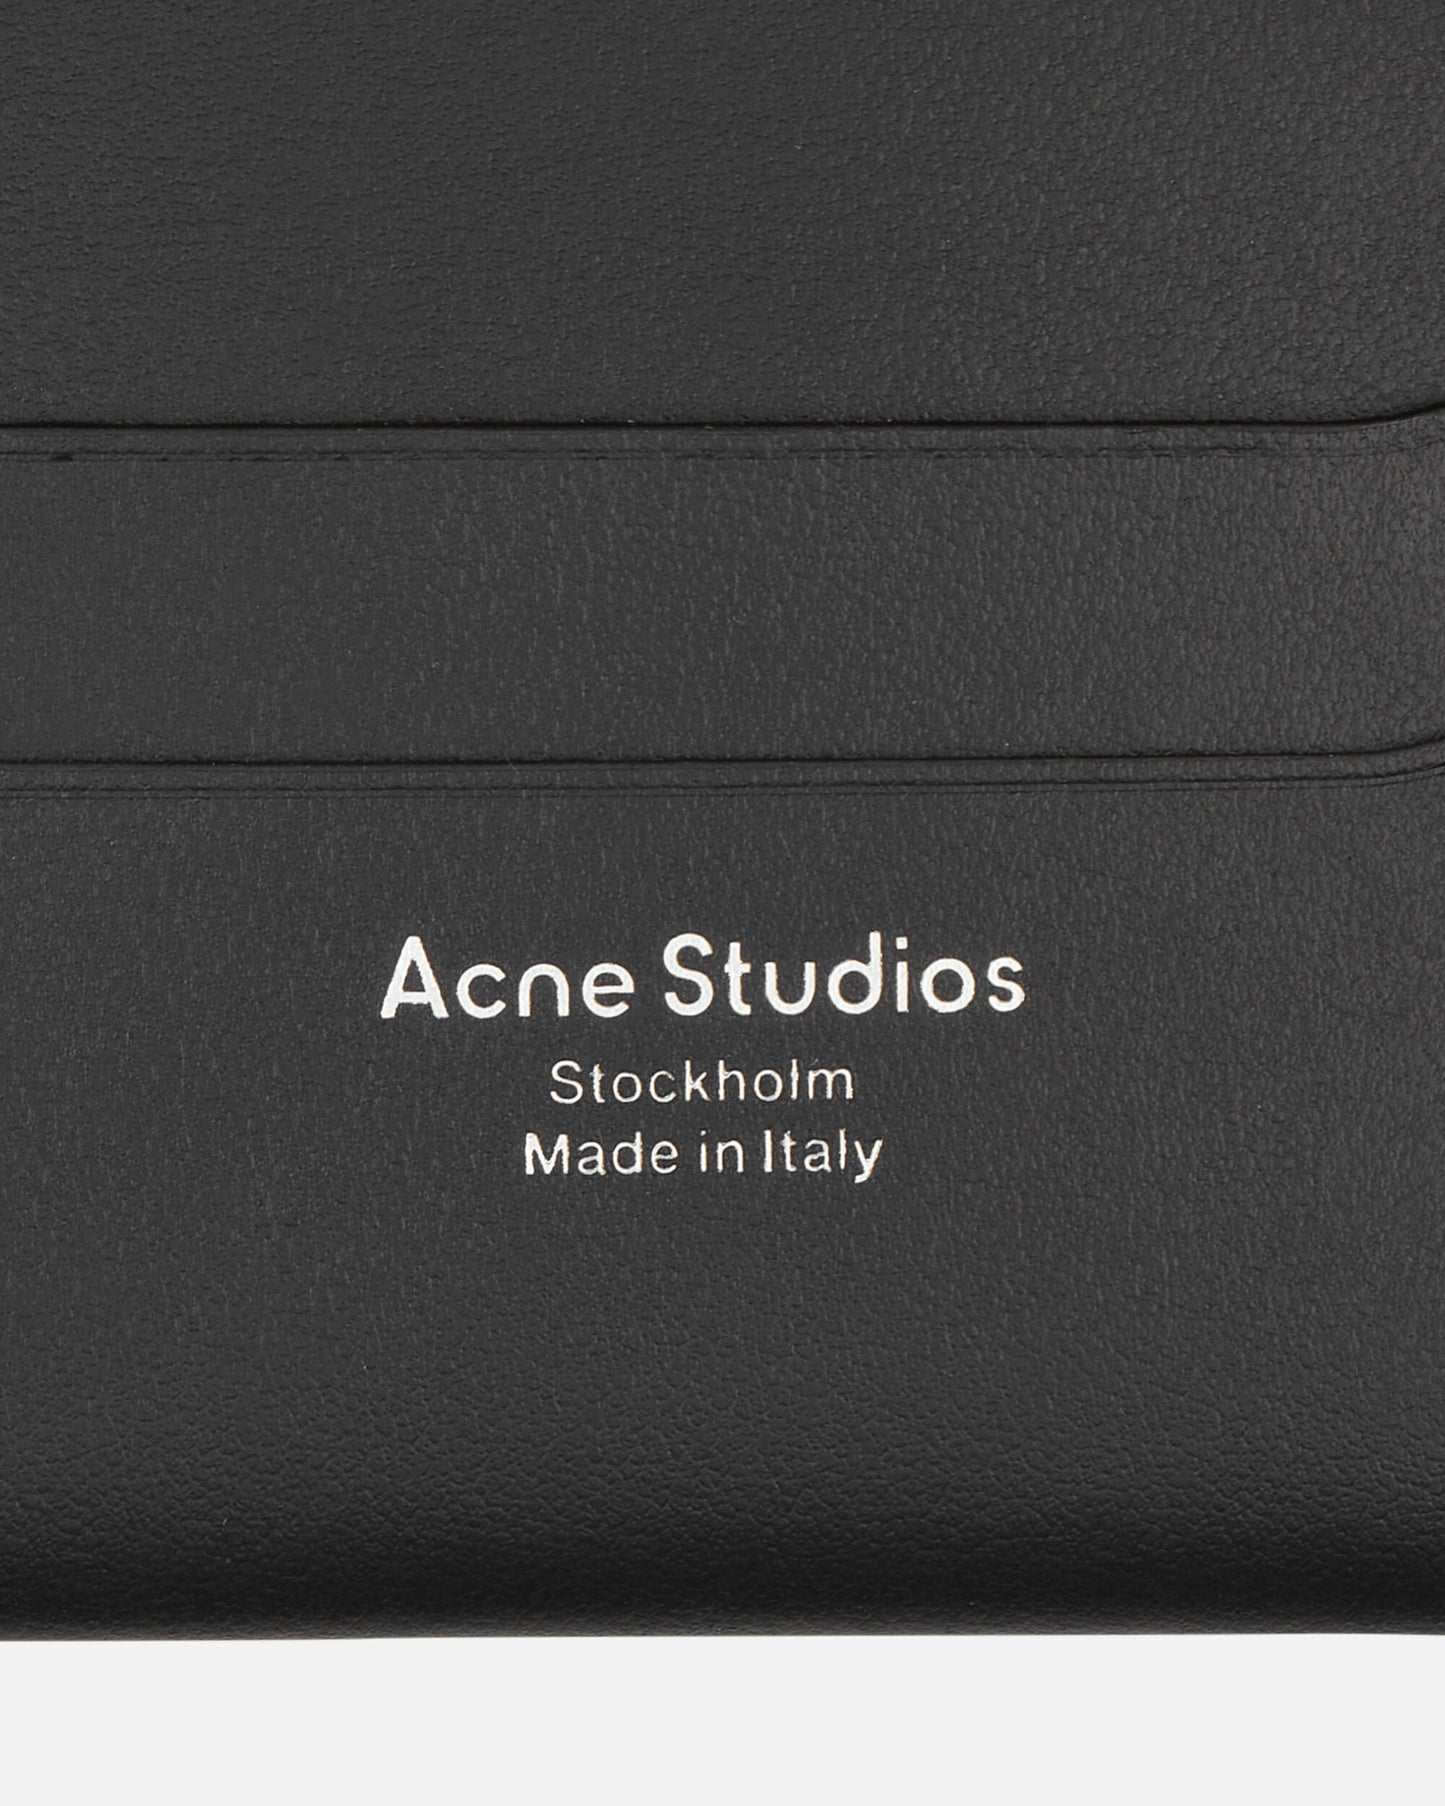 Acne Studios Elmas Large S Black Wallets and Cardholders Cardholders CG0193- 900